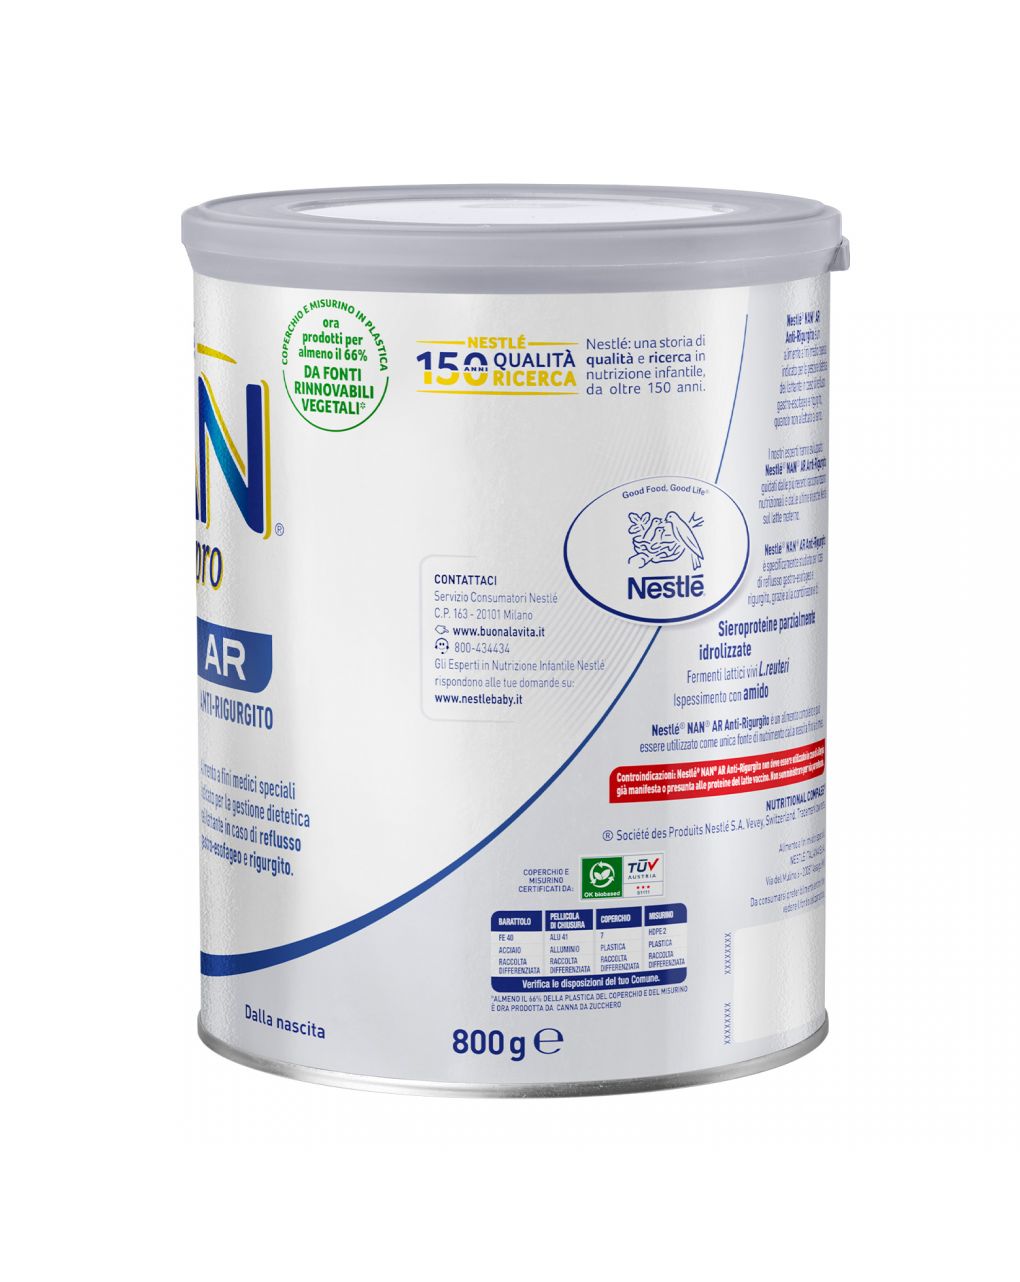 Nestlé Nidina 1 latte polvere, Confronta prezzi